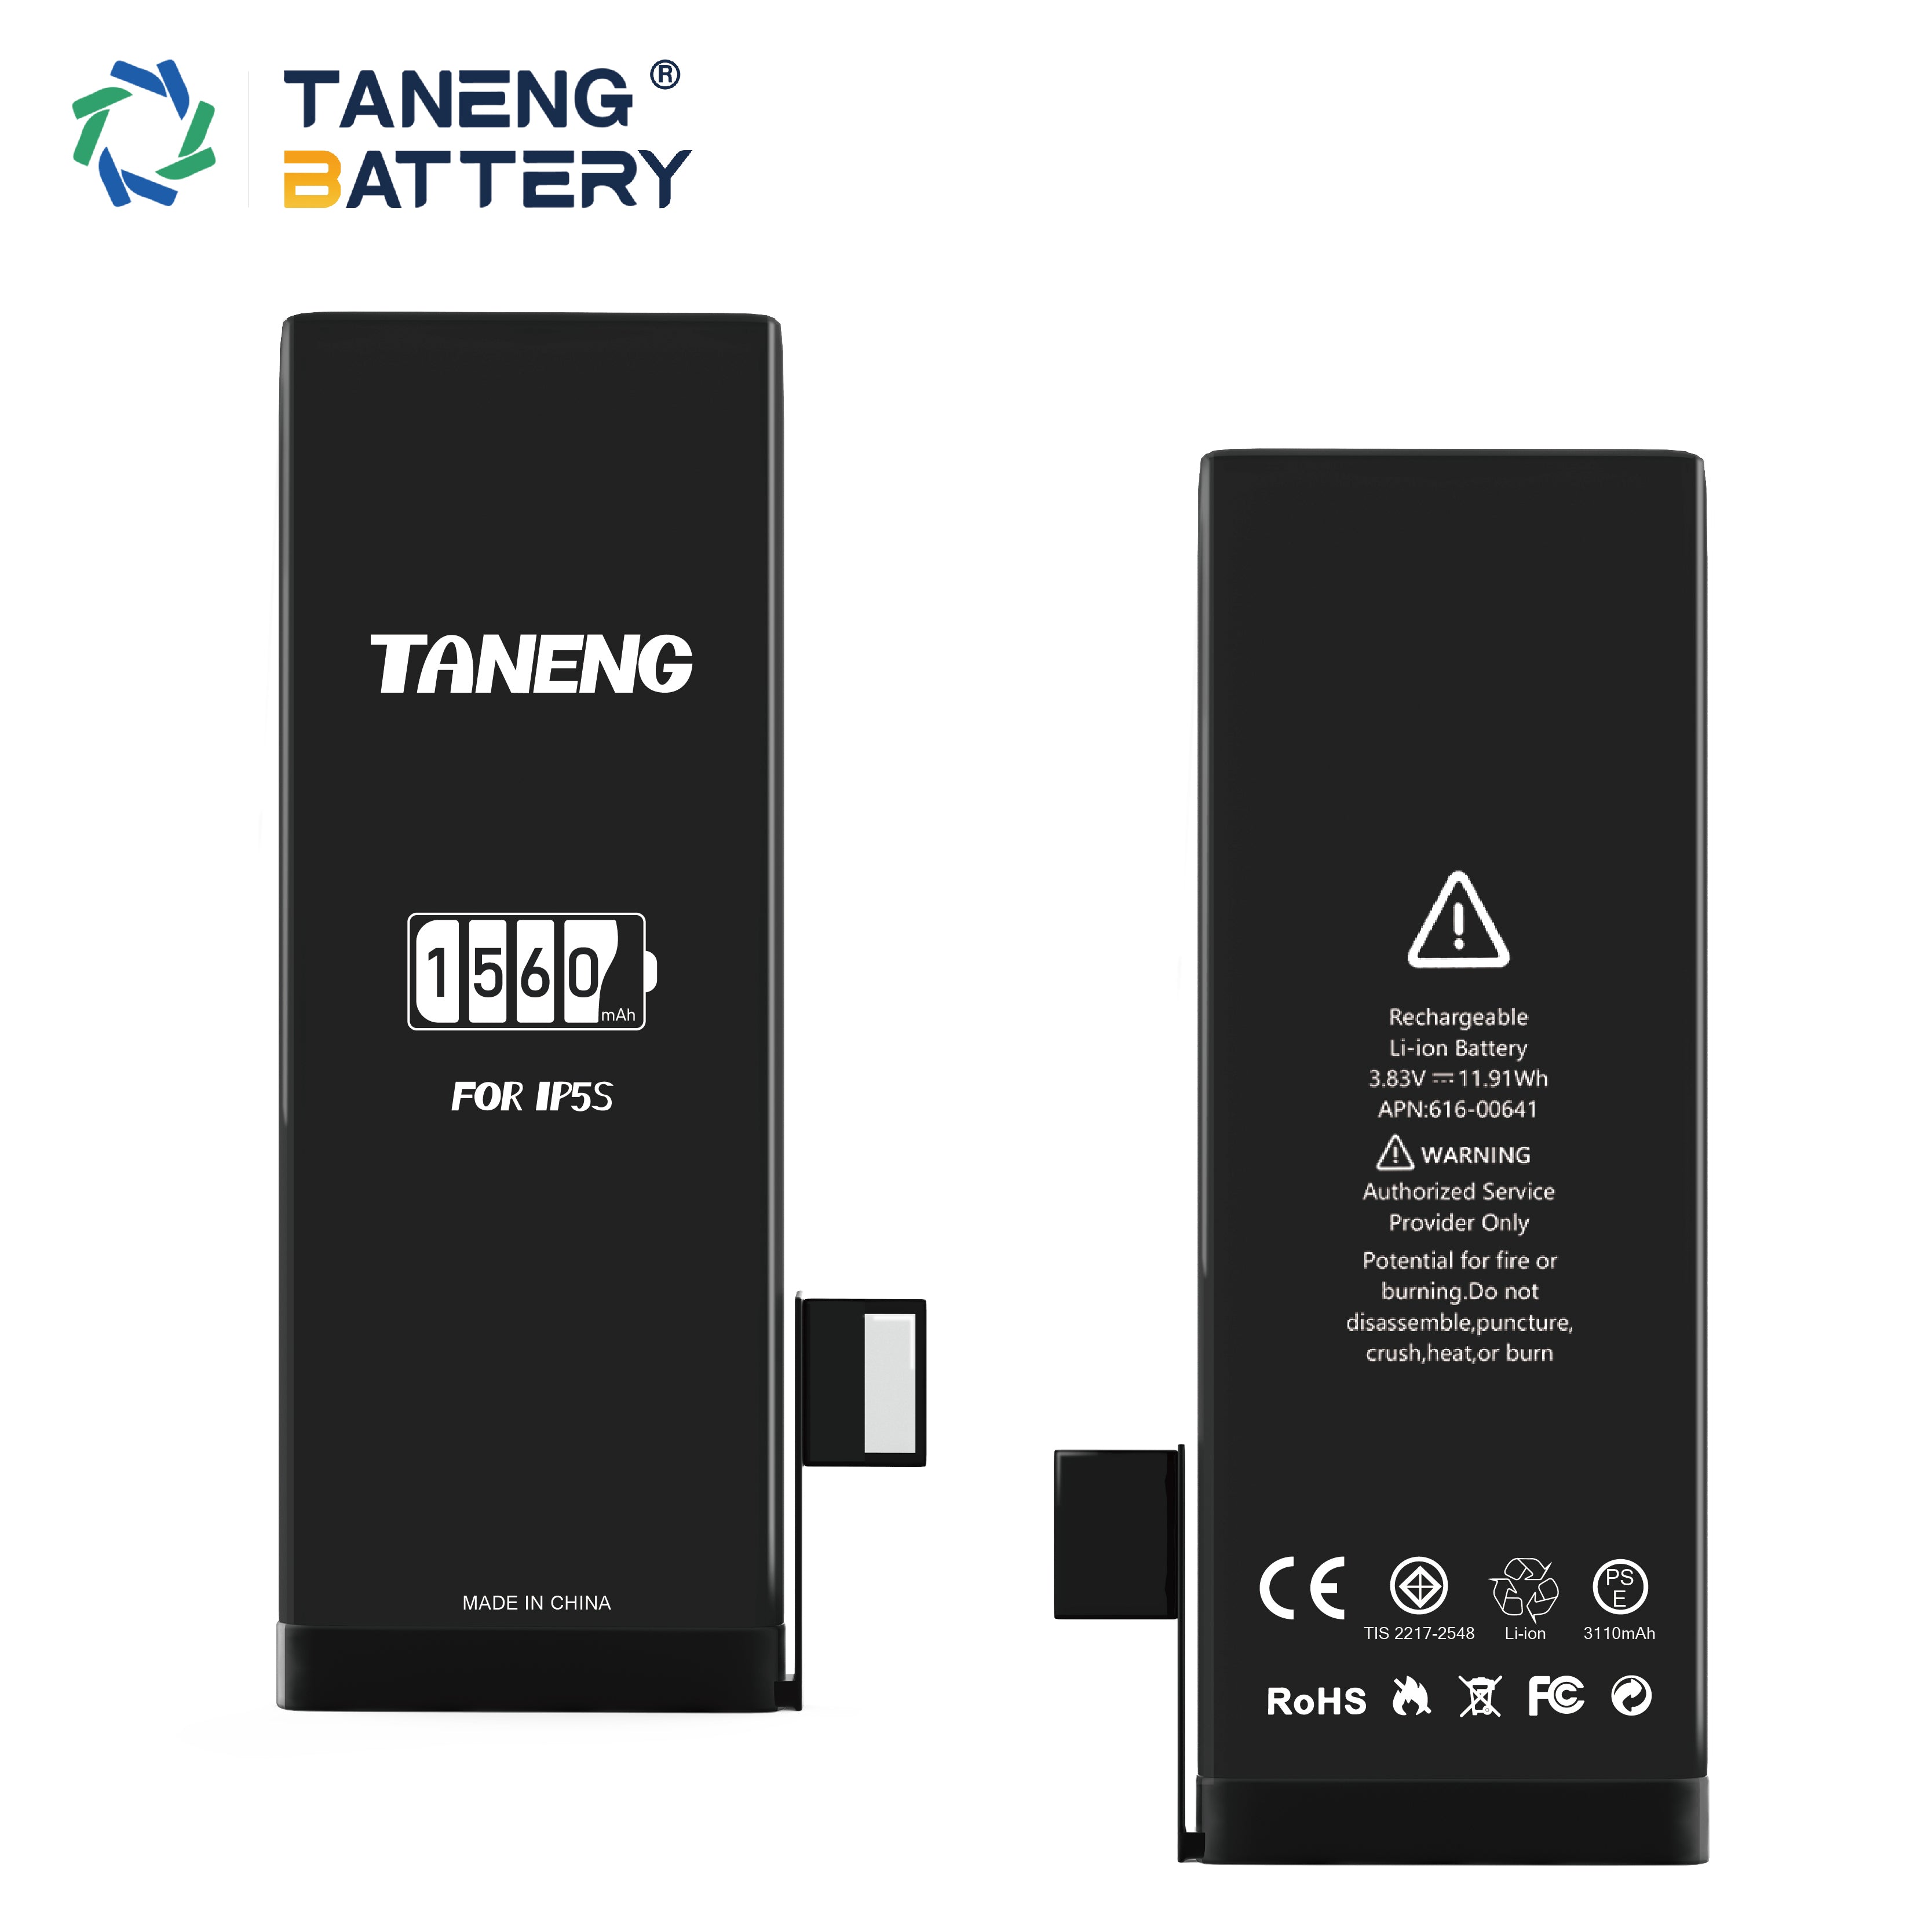 TANENG Brand Original Capacity 1560mah Standard Battery For iPhone 5S Factory Wholesale